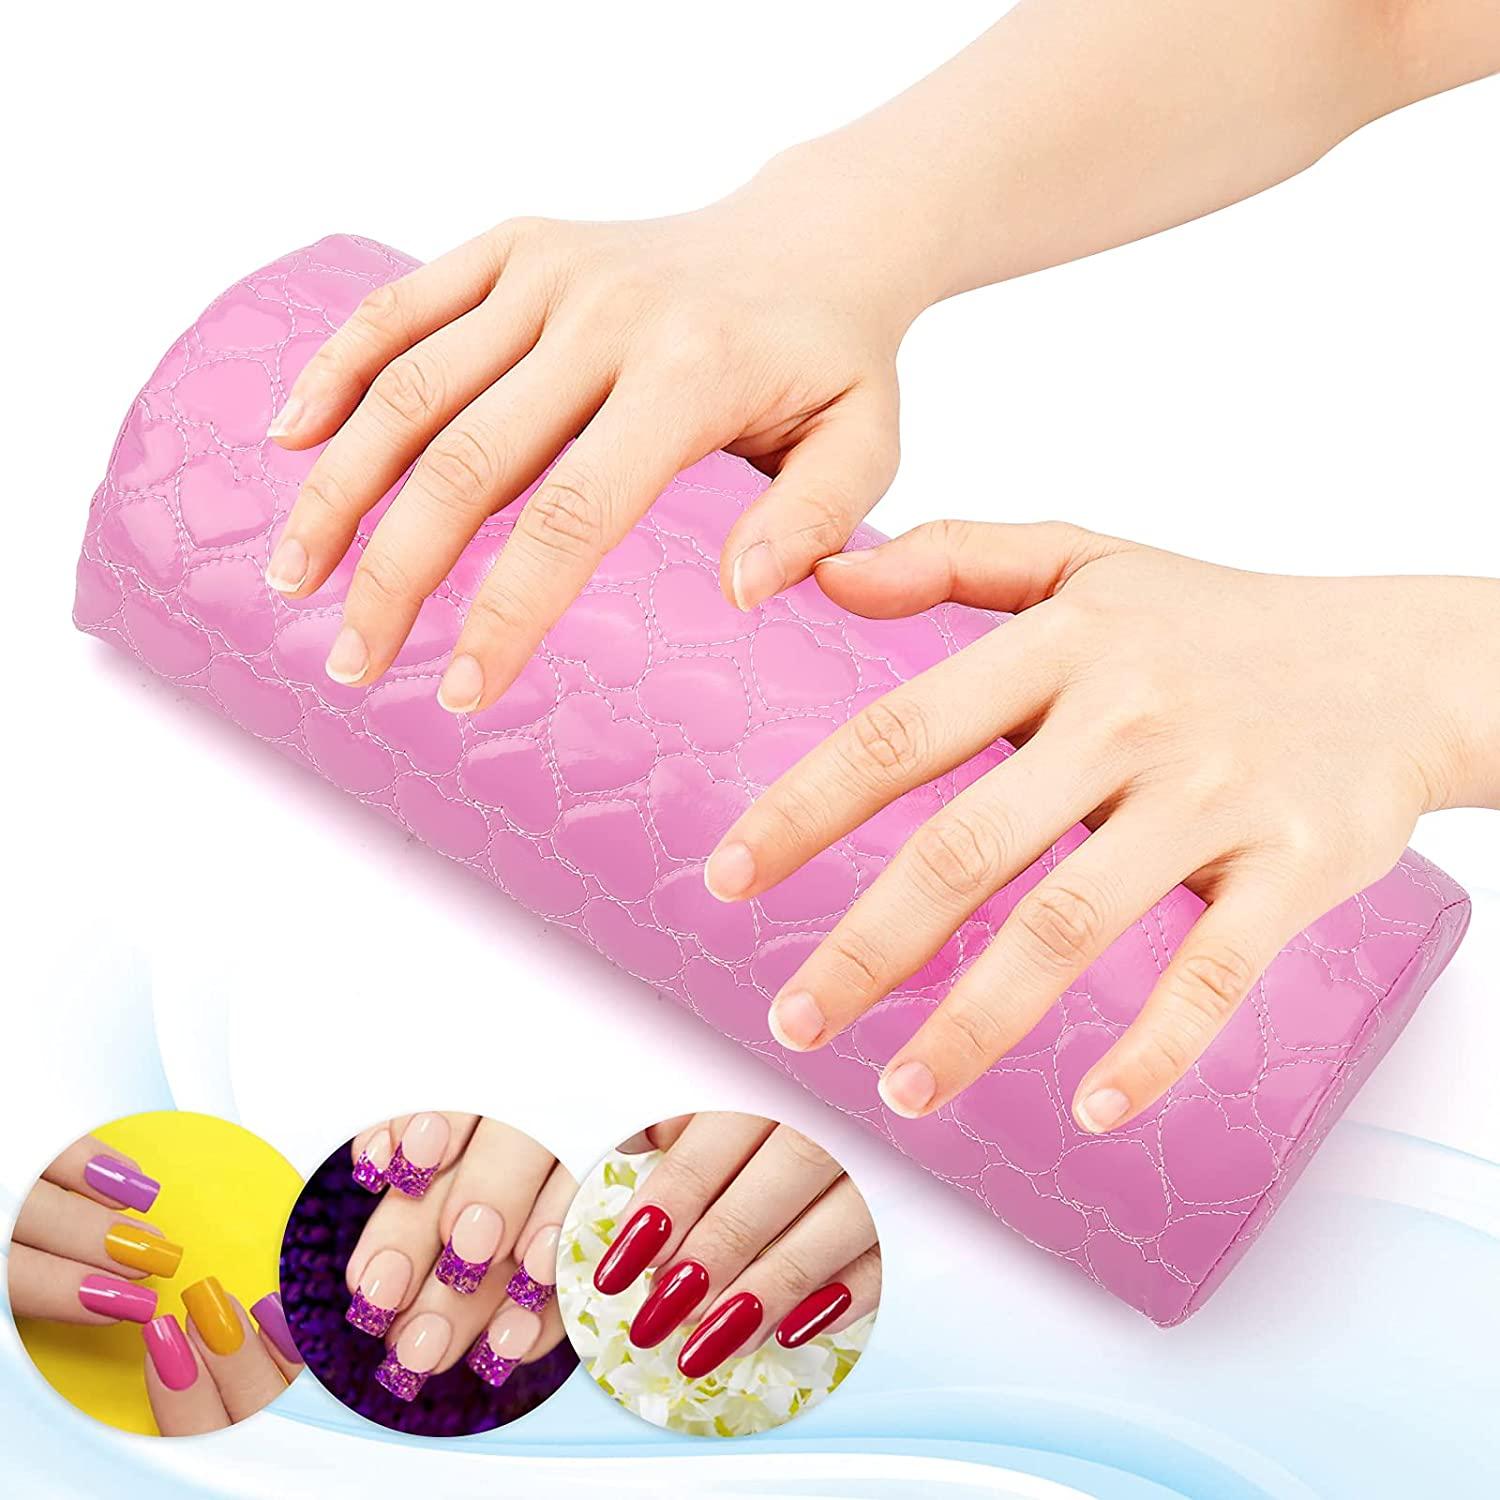 Beavorty 4pcs Nail Art Hand Pillow Nails Accessories Desktop